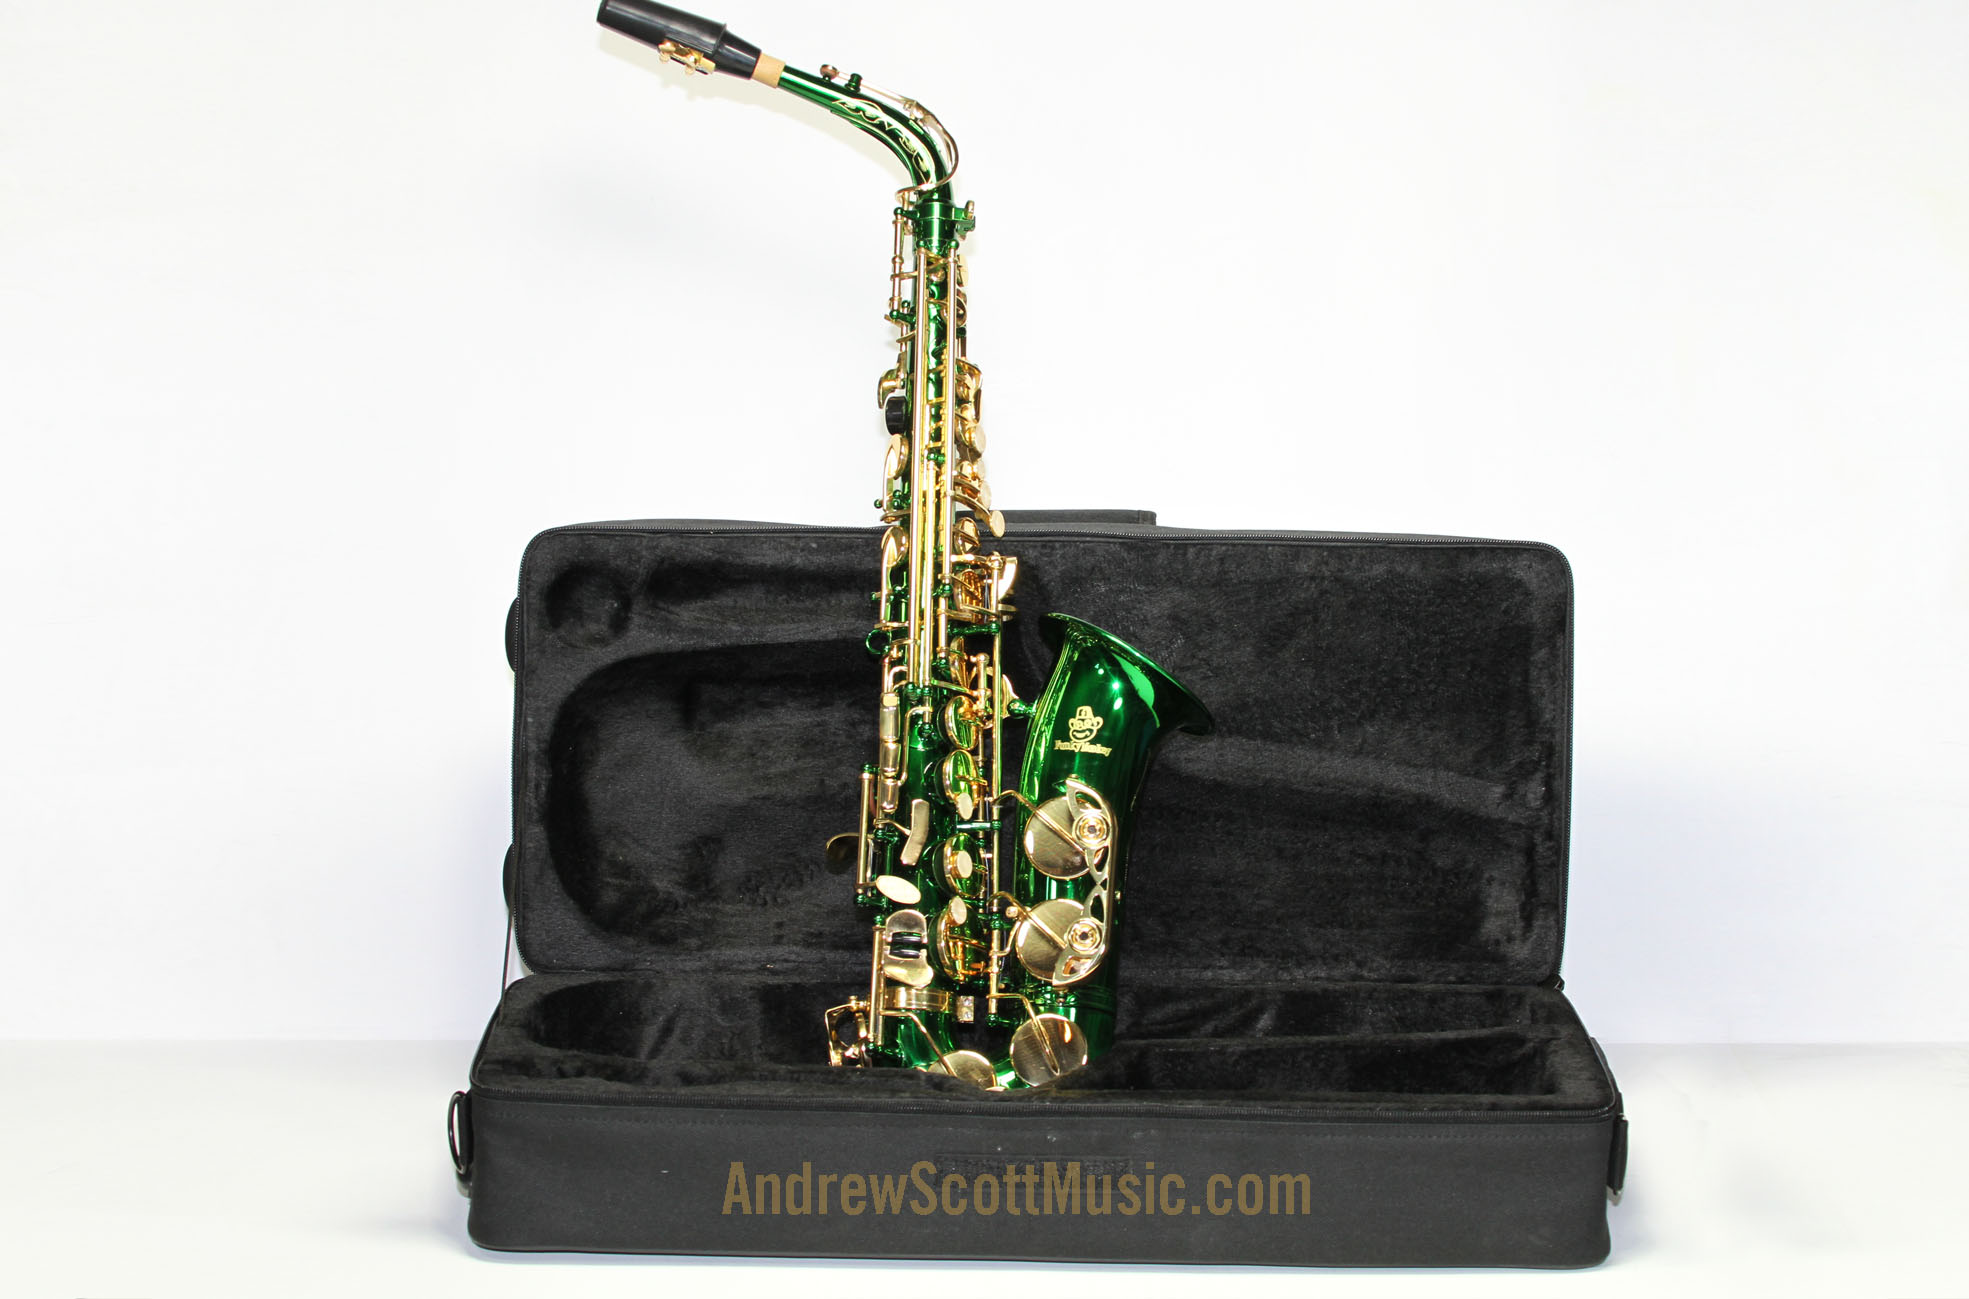 New Green Alto Saxophone in Case - Masterpiece | eBay